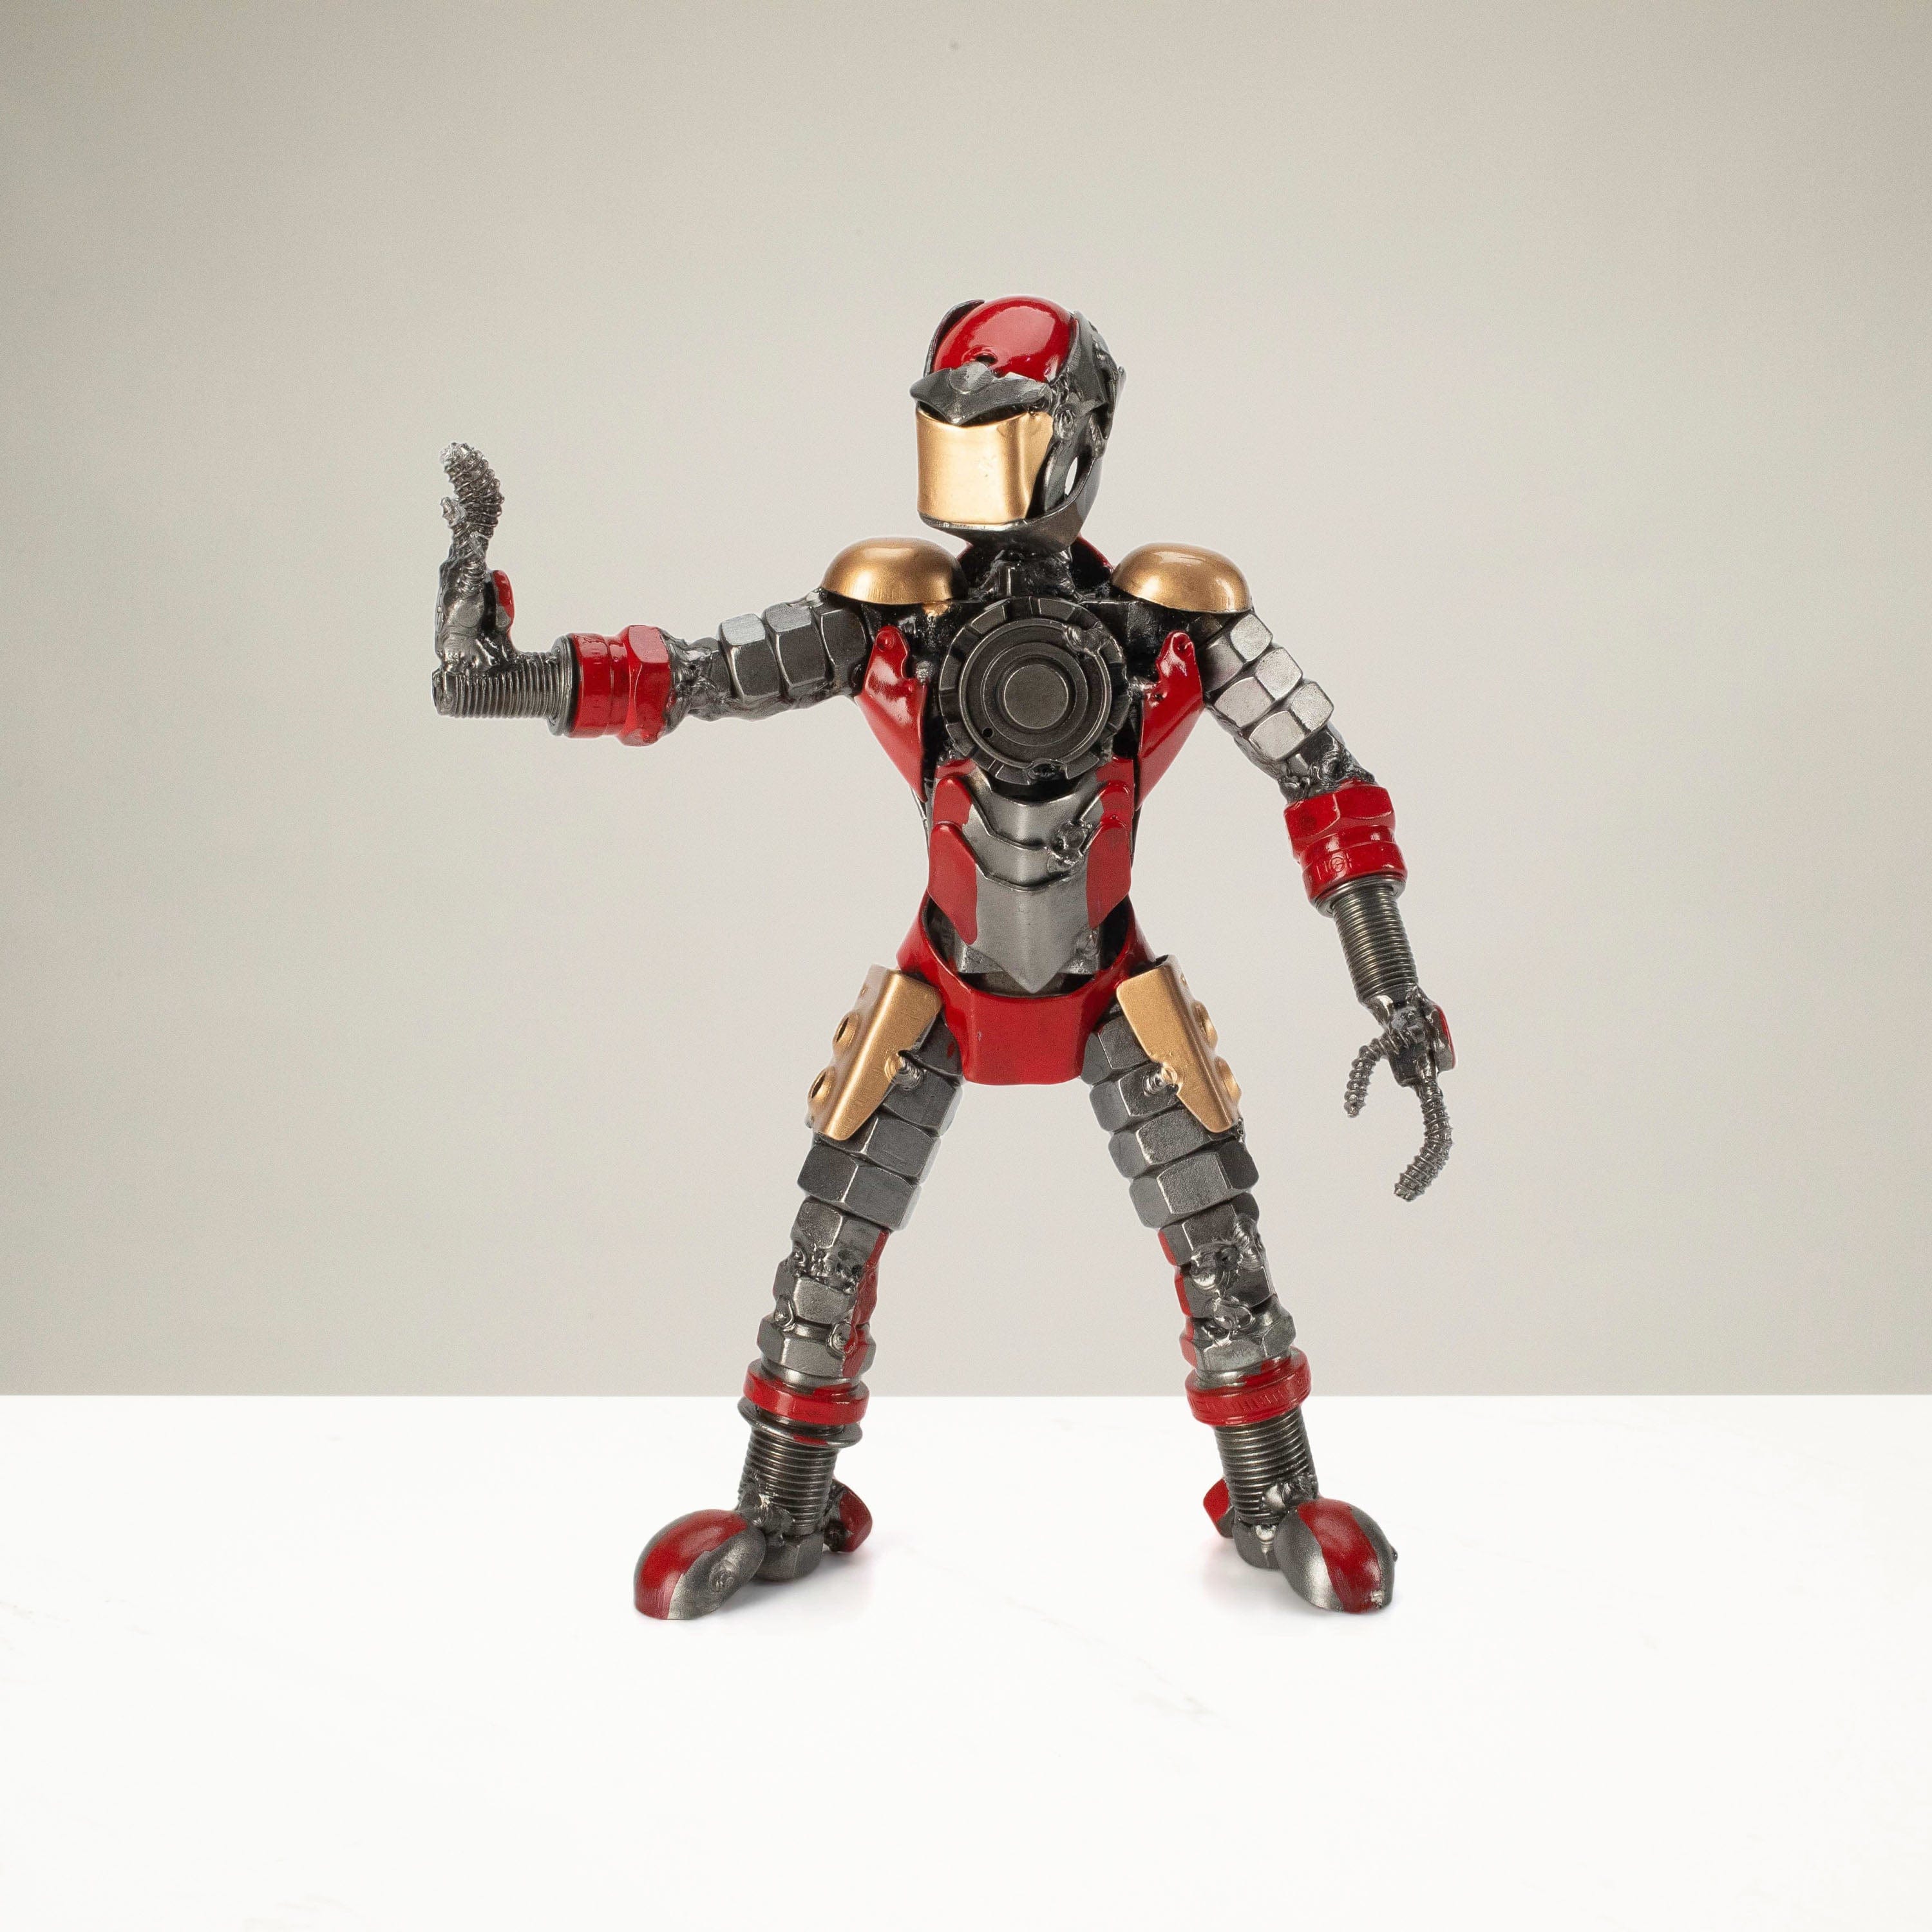 Kalifano Recycled Metal Art 7.5” Iron Man Inspired Recycled Metal Sculpture RMS-450IMR-N